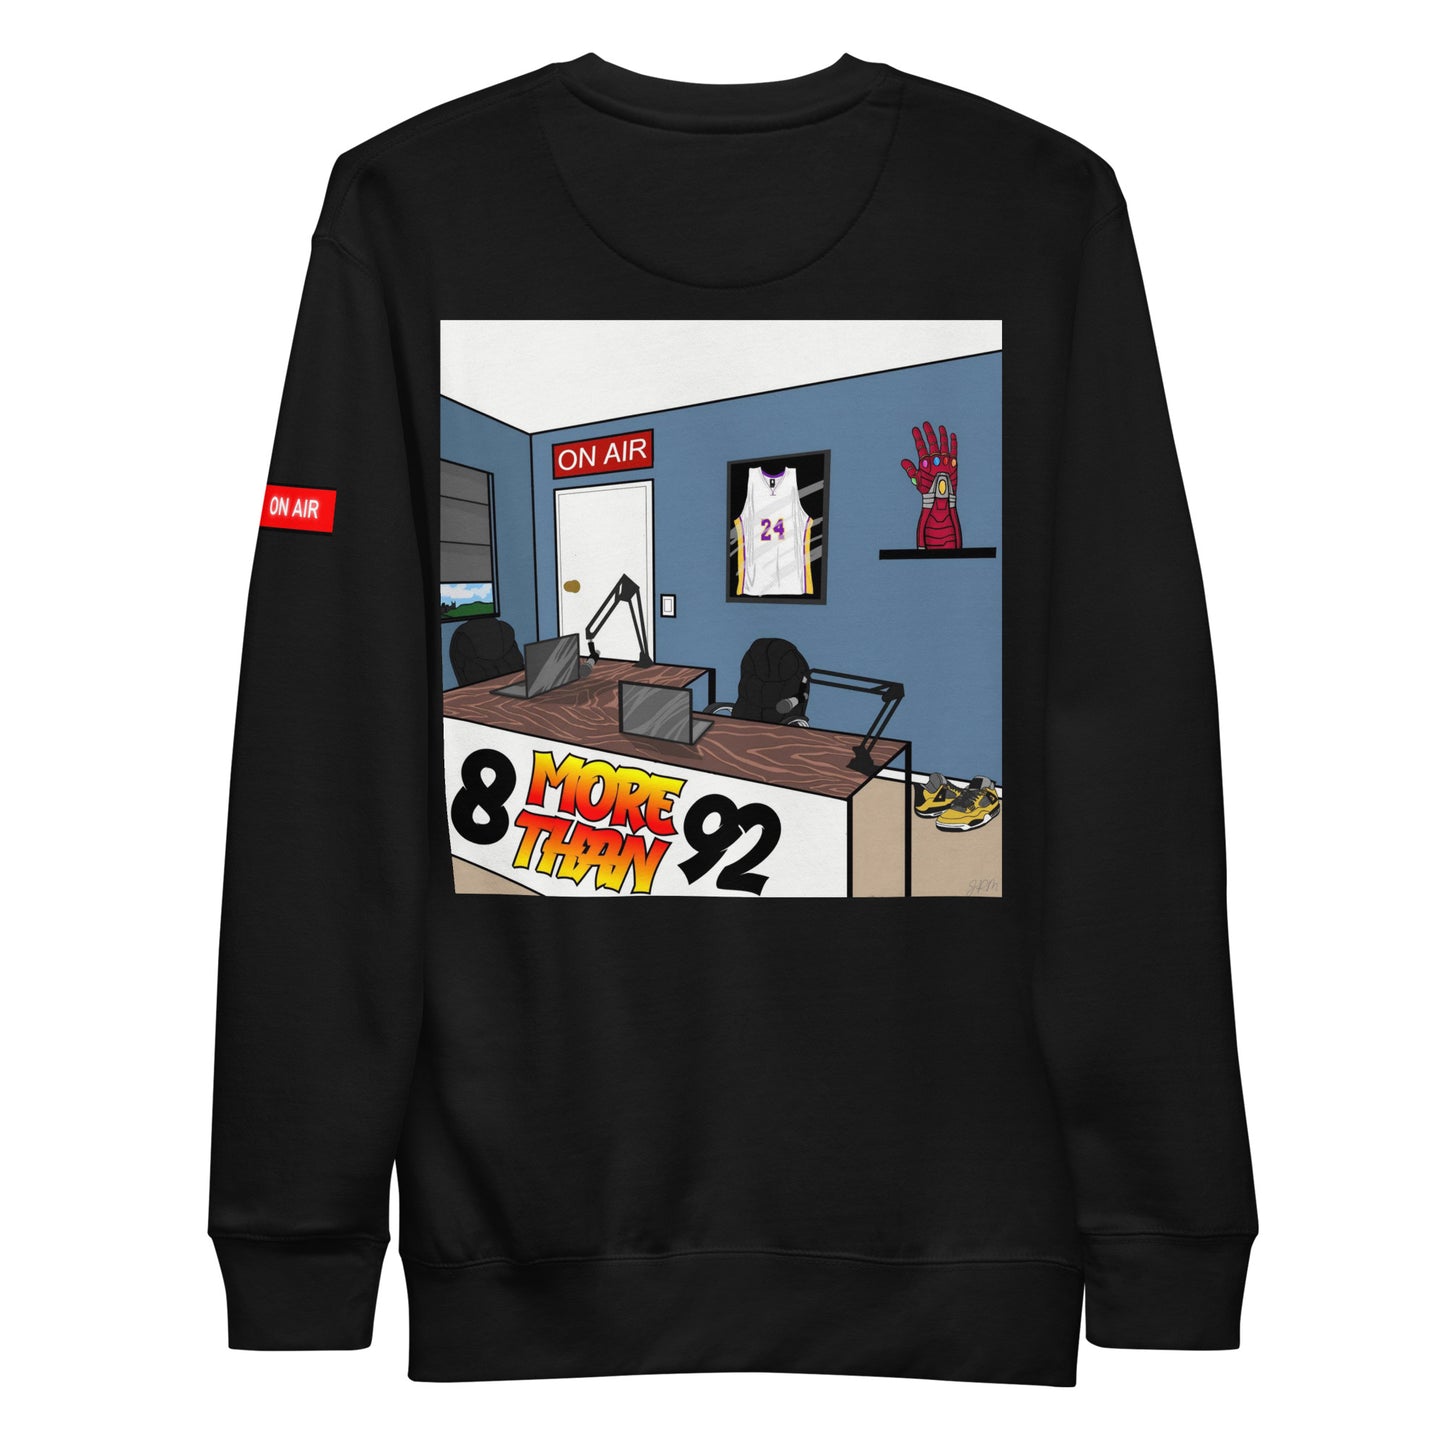 8 More Than 92 Sweatshirt